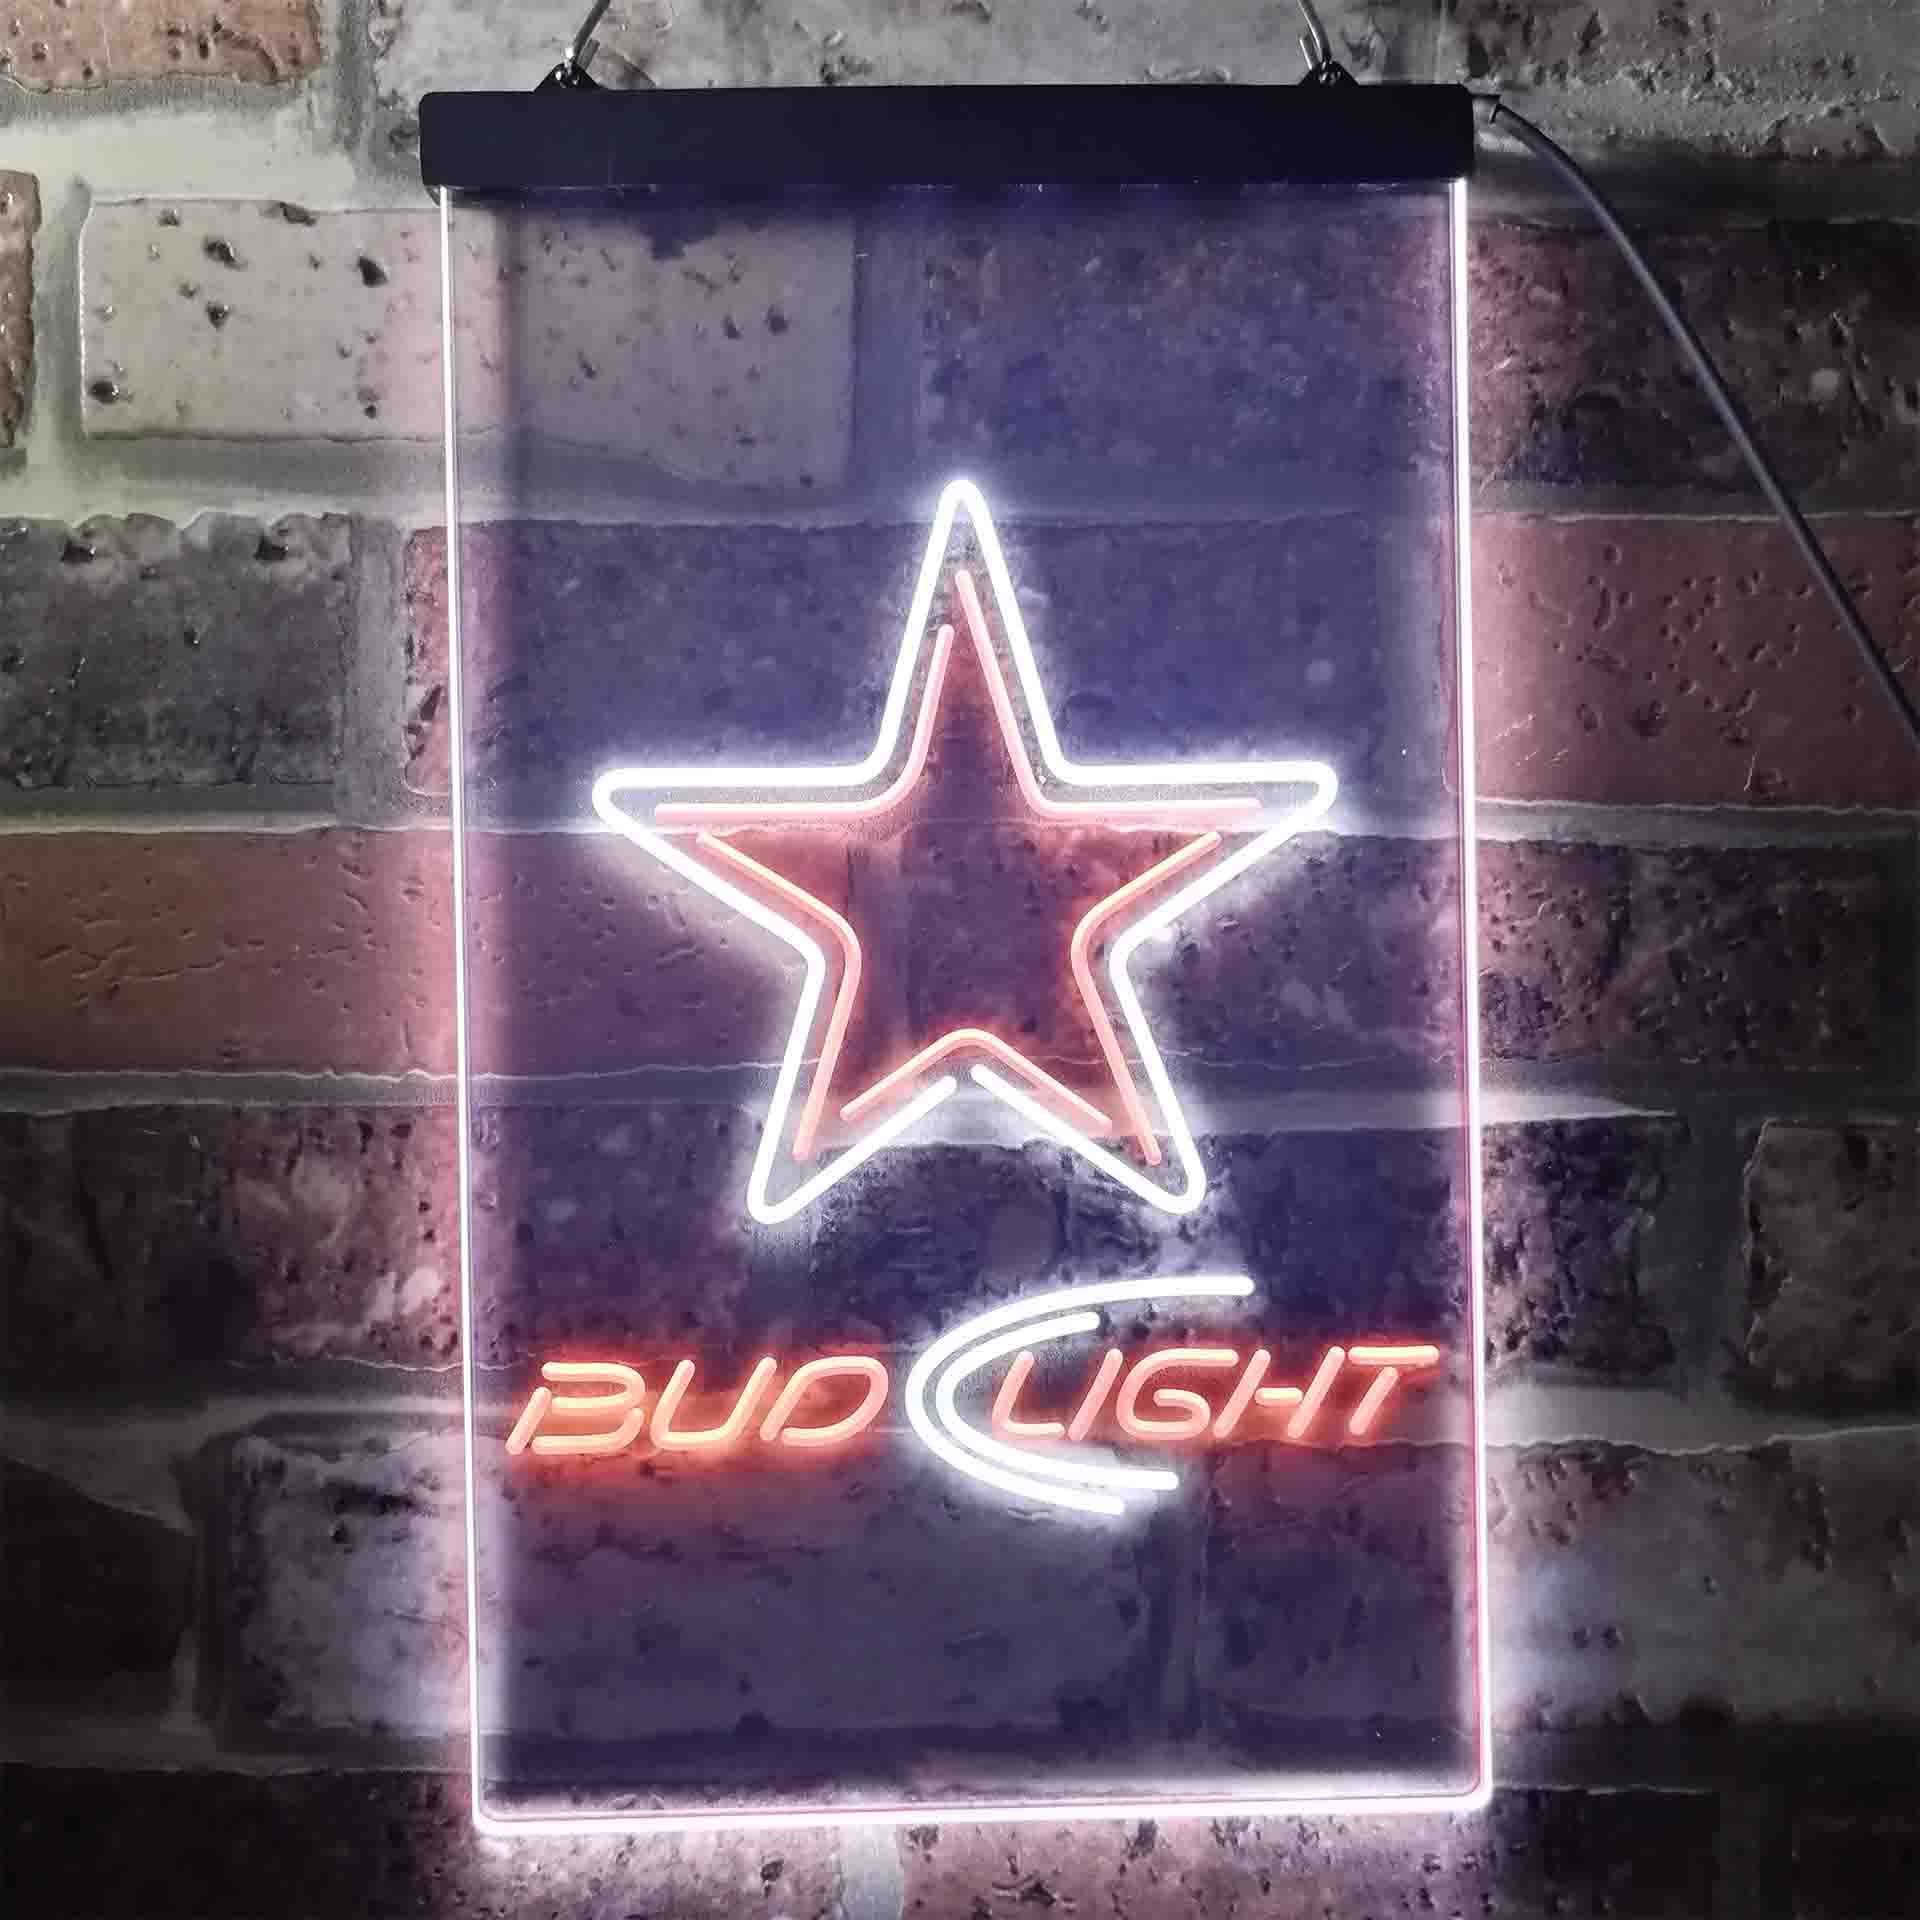 Bud Light Dallas Cowboys Neon LED Sign